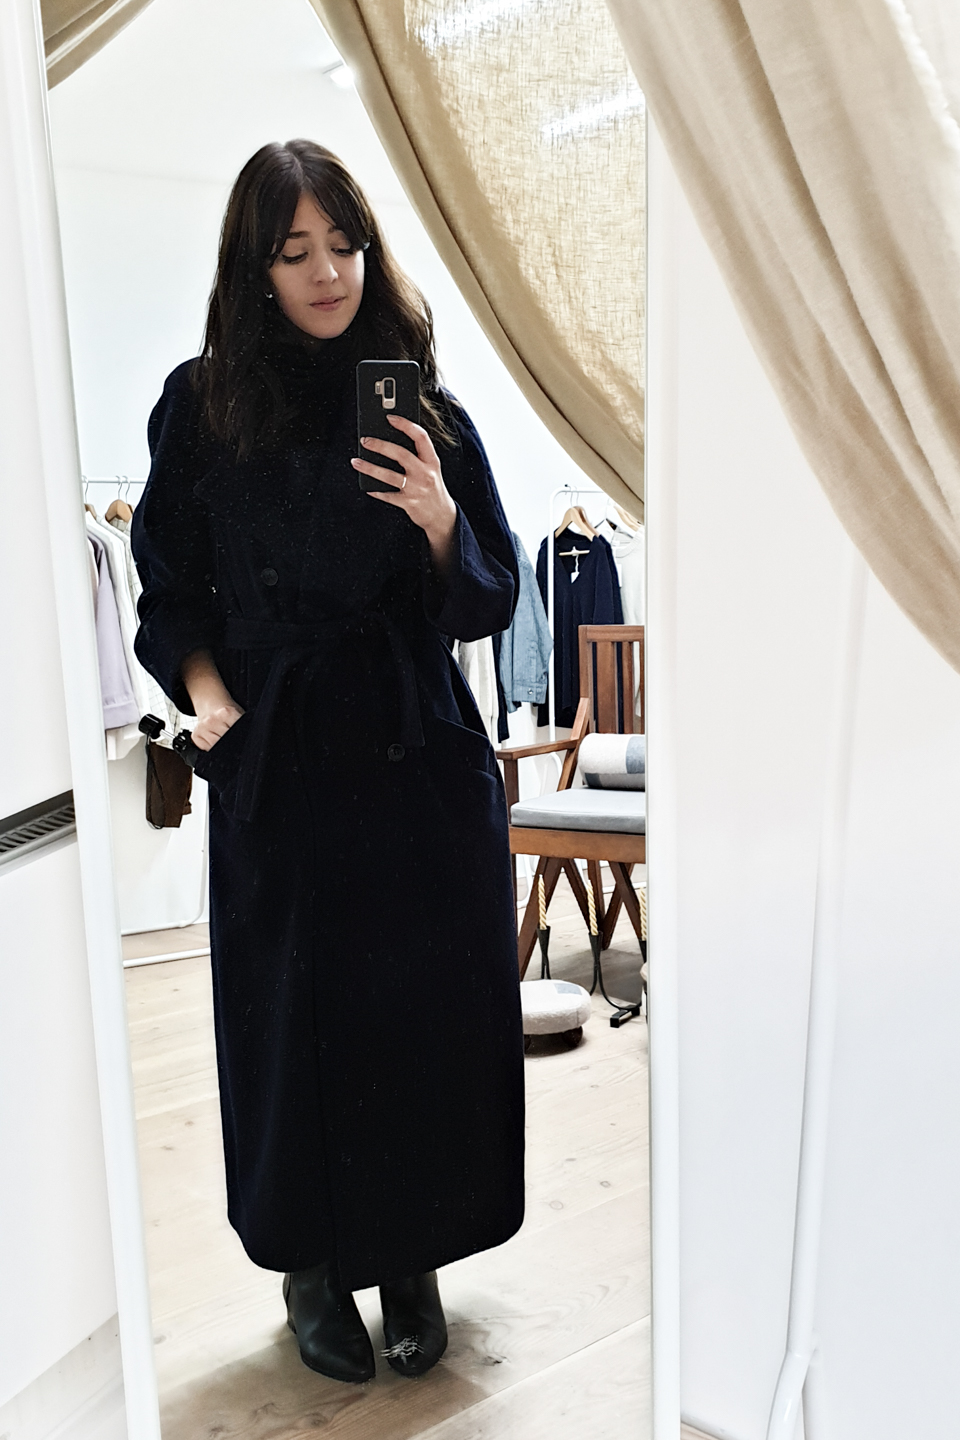 Besma wearing Black Wool Scarf with coat